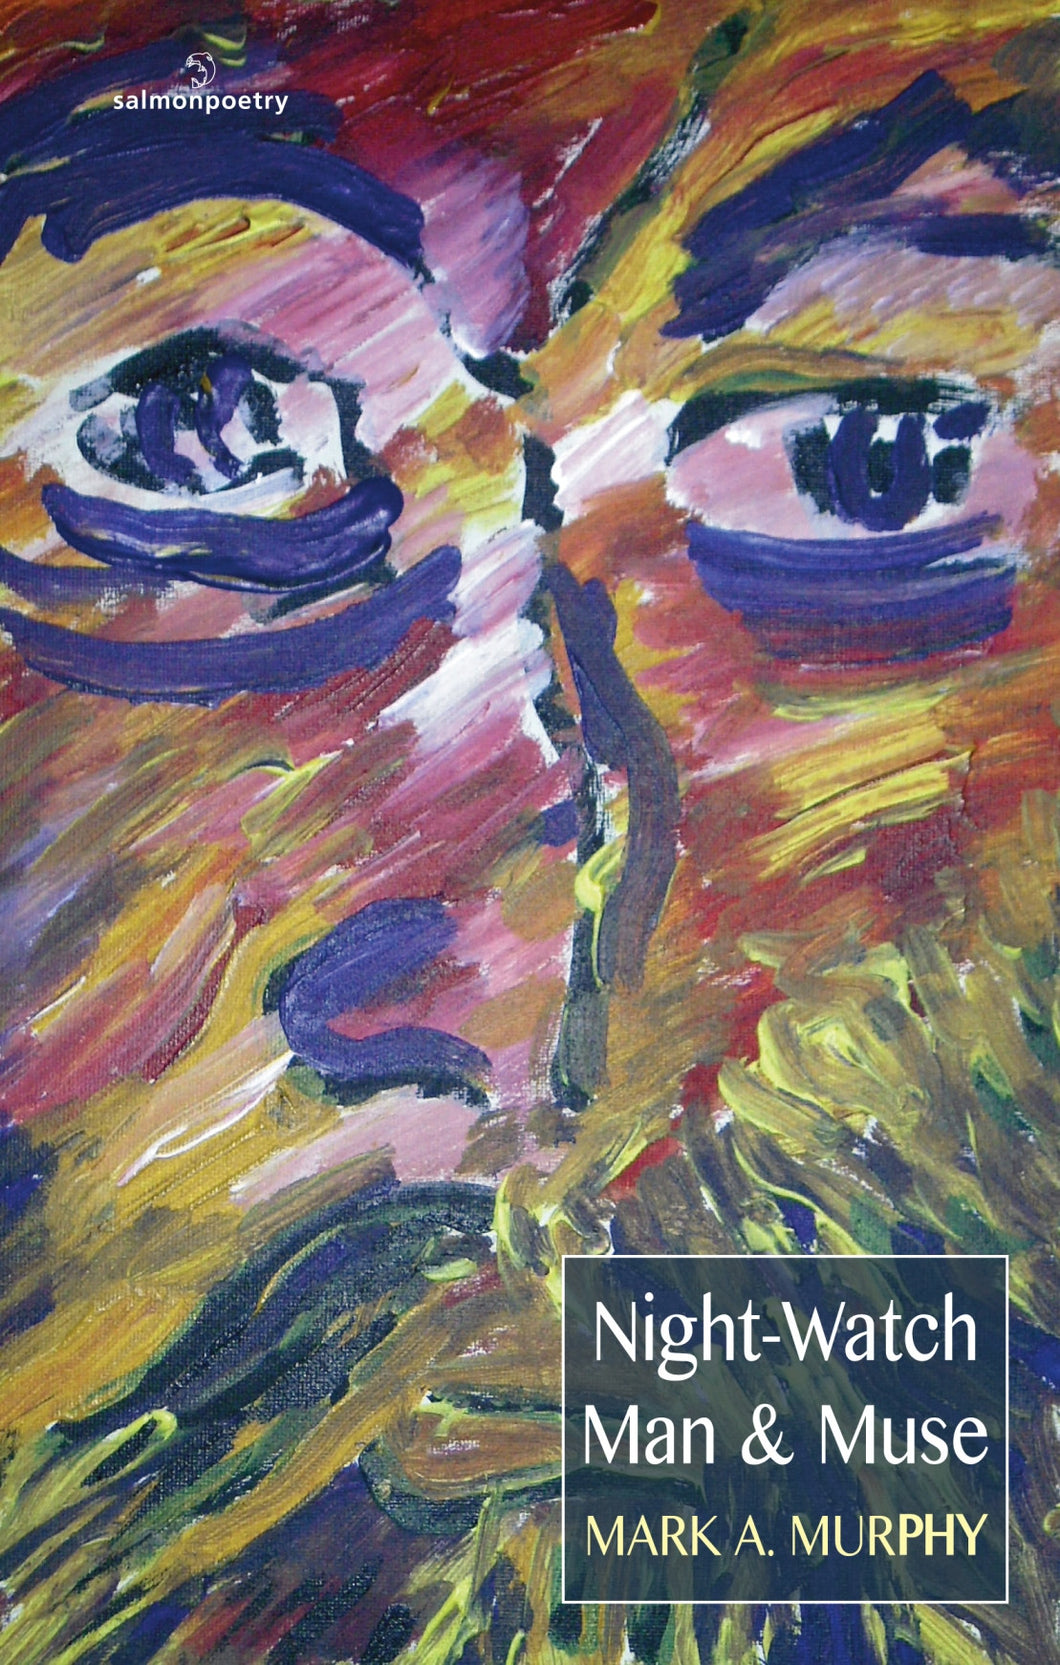 Night-Watch Man & Muse